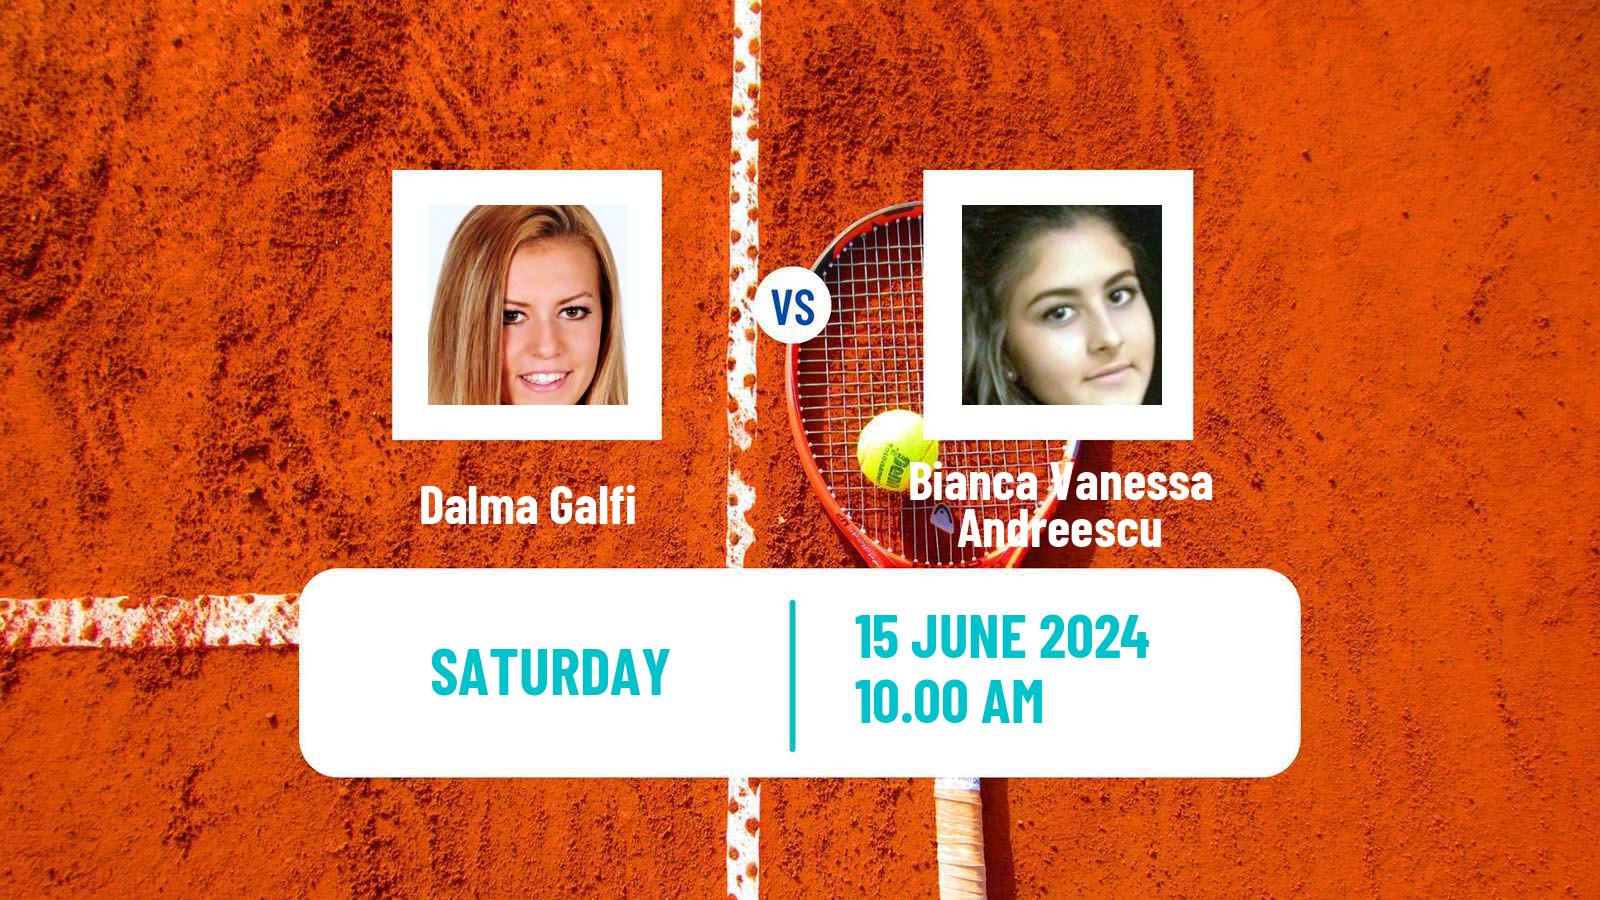 Tennis WTA Hertogenbosch Dalma Galfi - Bianca Vanessa Andreescu